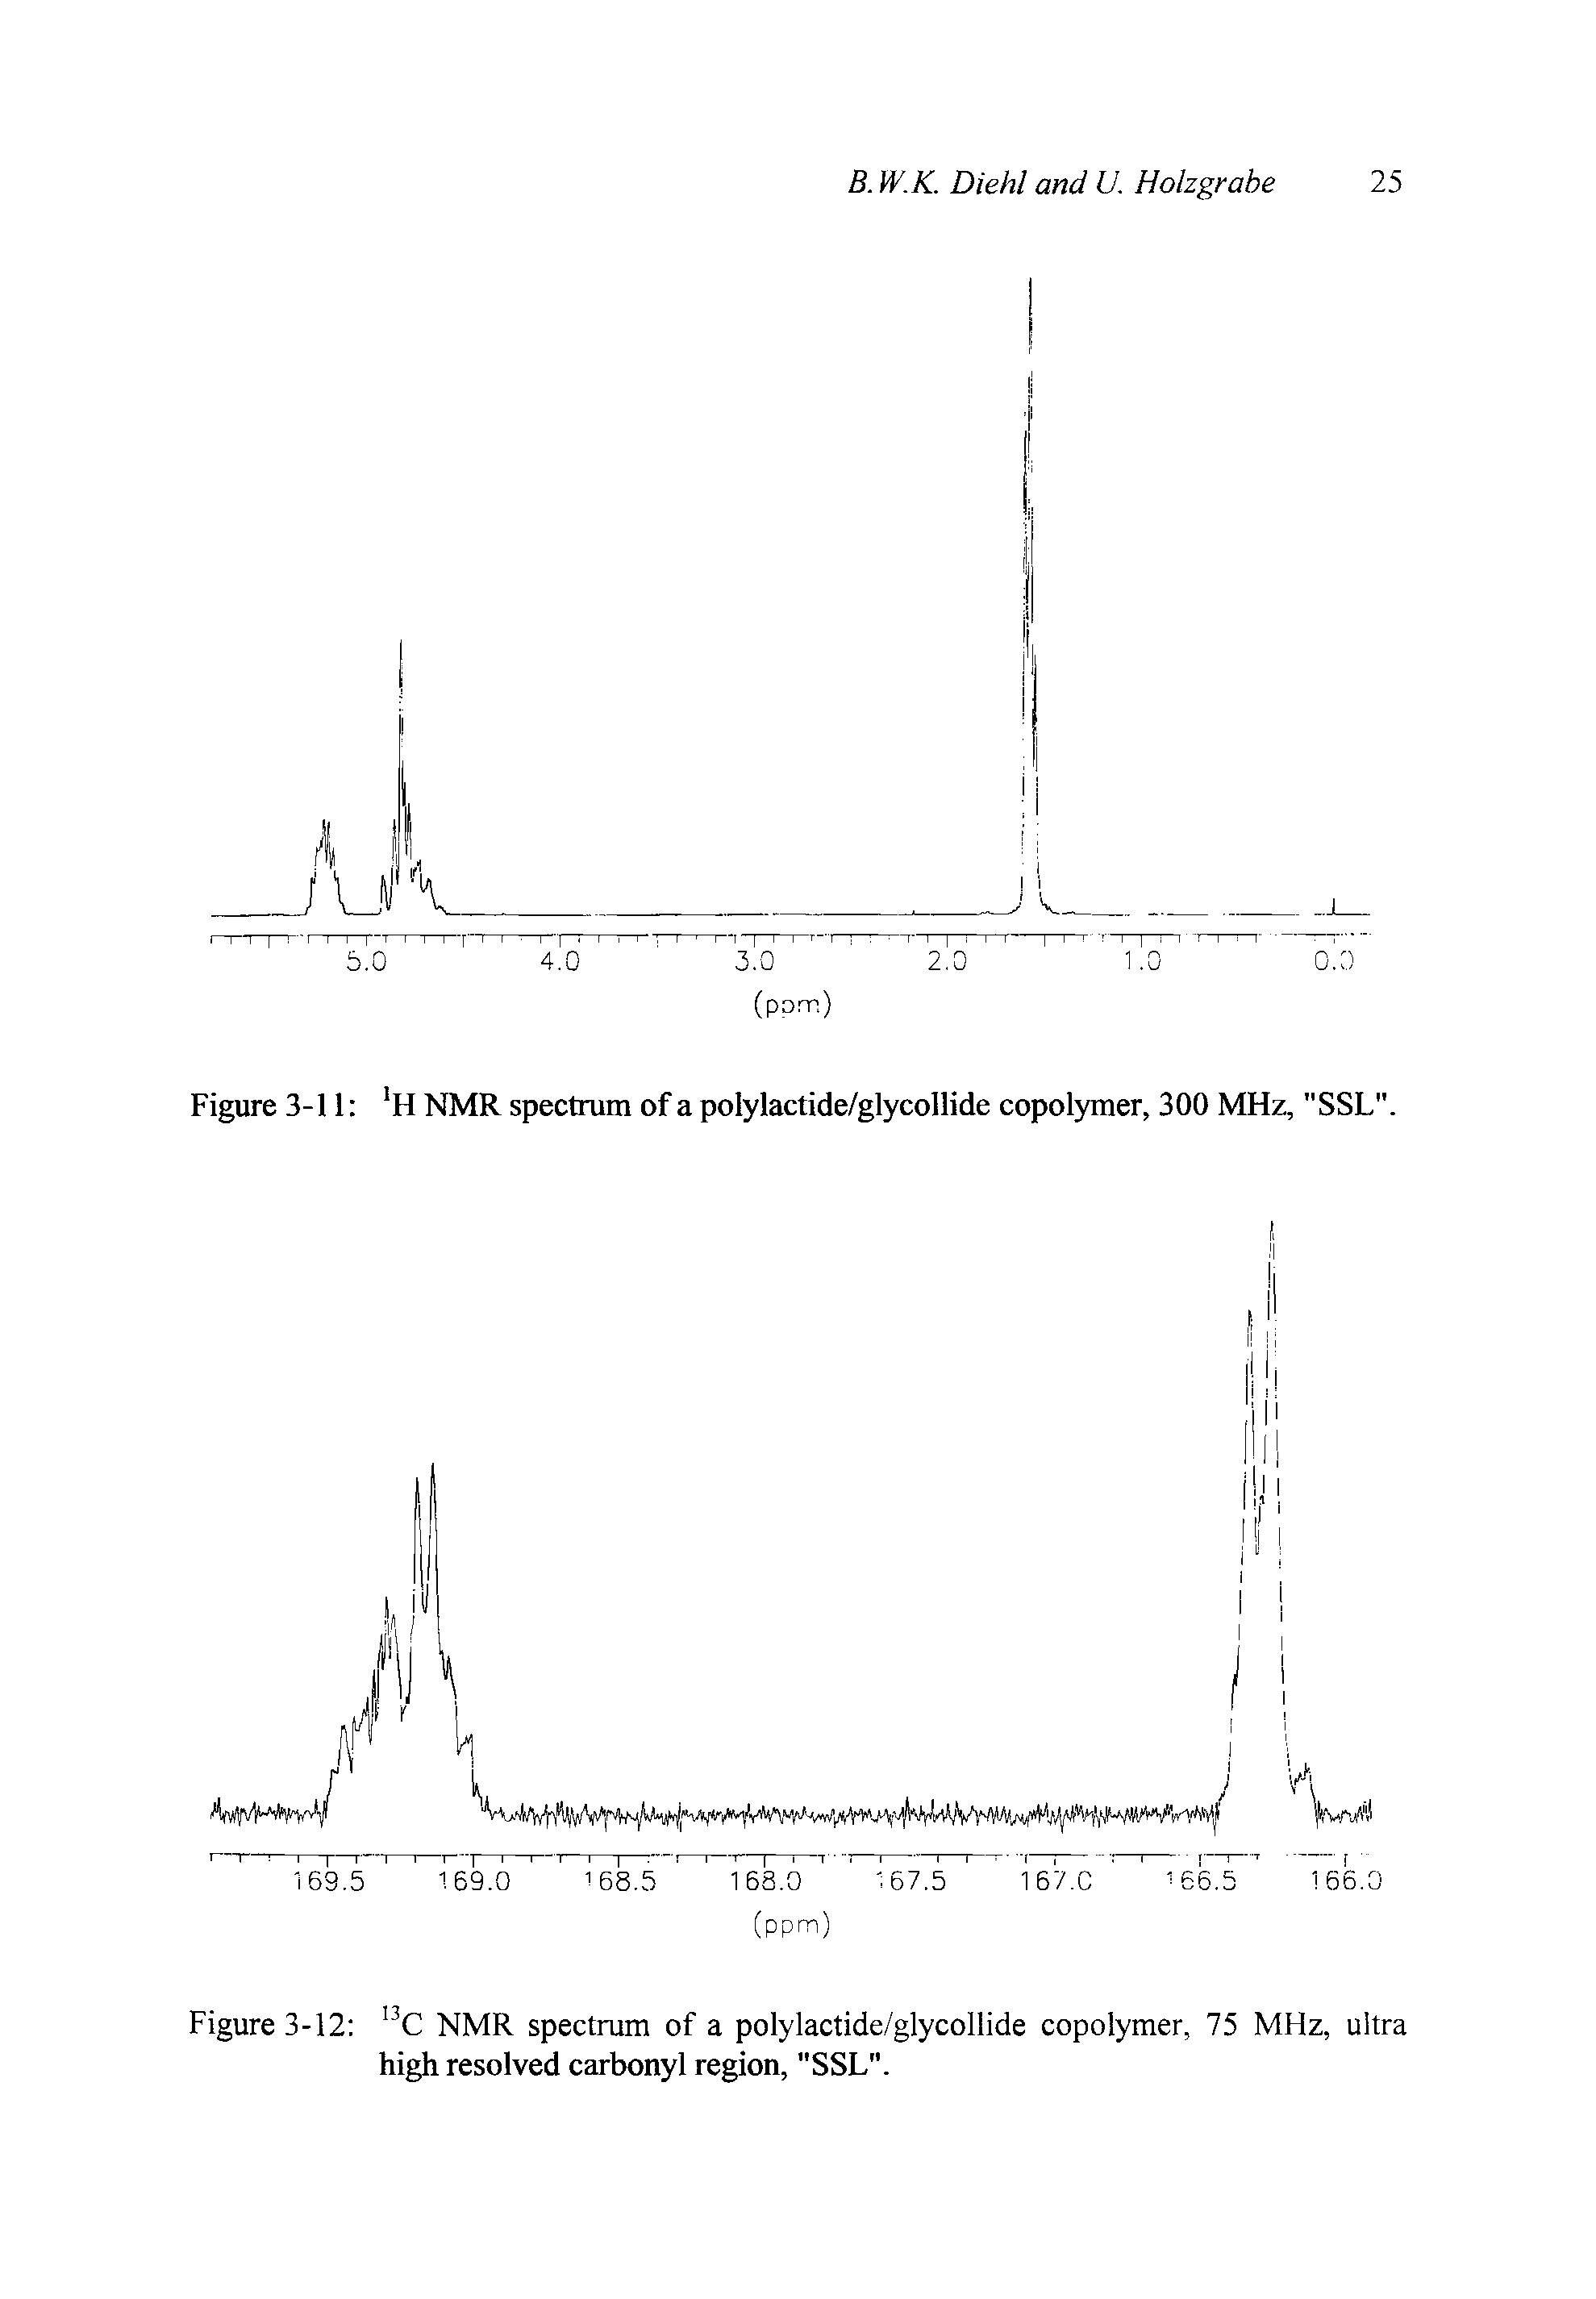 Figure 3-12 C NMR spectrum of a polylactide/glycollide copolymer, 75 MHz, ultra high resolved carbonyl region, "SSL".